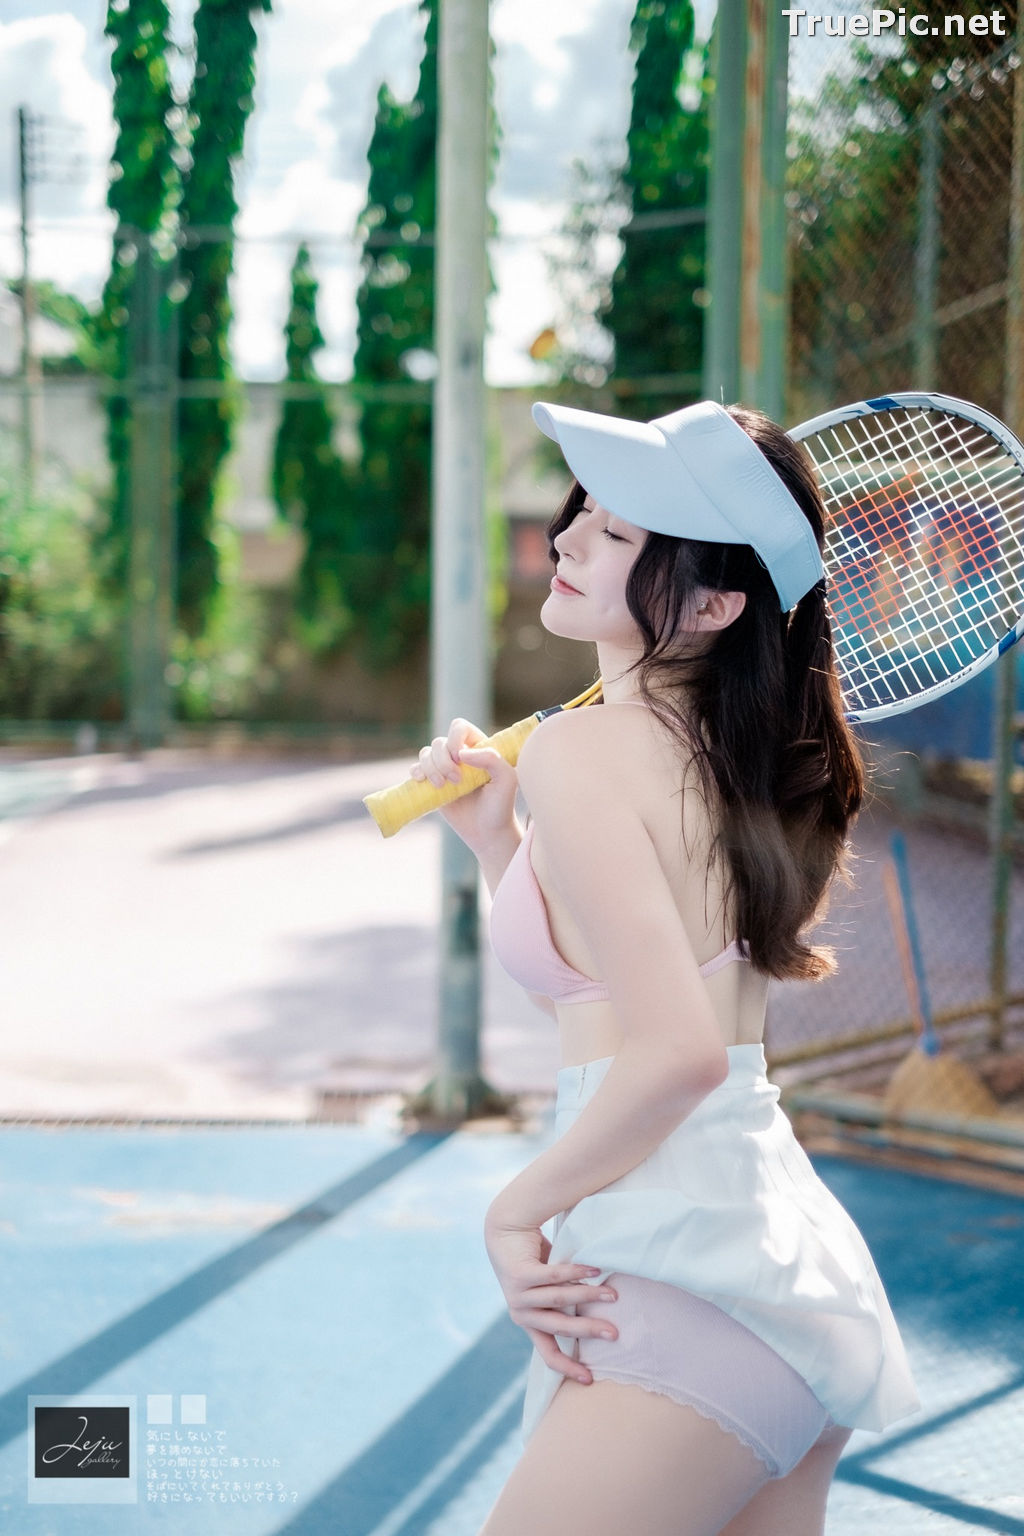 Image Thailand Model - Sarutaya Tawechaisupaphong - Hot Girl Tennis - TruePic.net - Picture-17